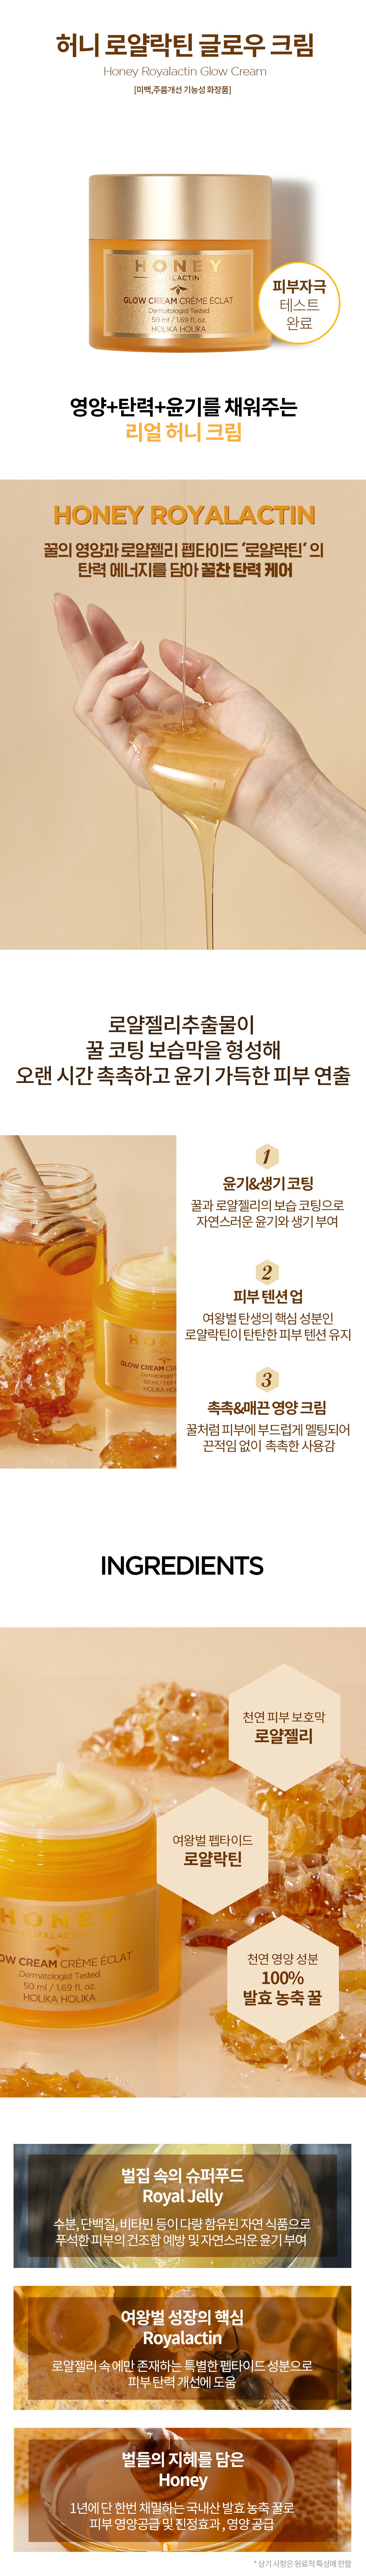 Holika Holika Honey Royalactin Glow Cream korean cosmetic skincare product online shop malaysia China hong kong3